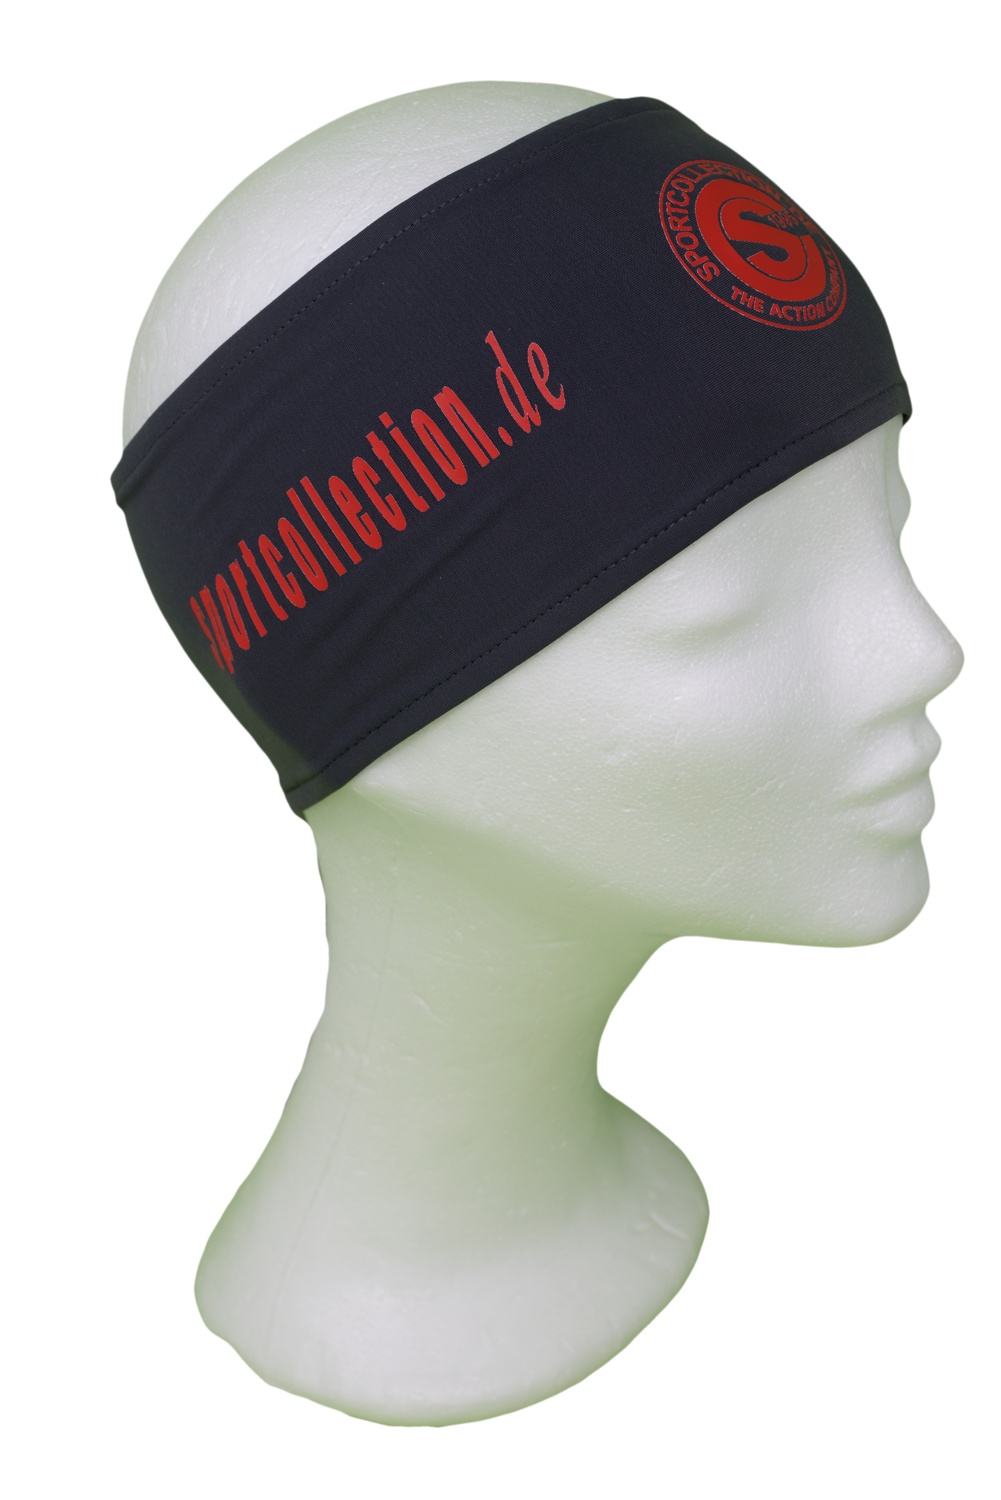 Stöhr Stirnband Grau-Rot-Logo-Text